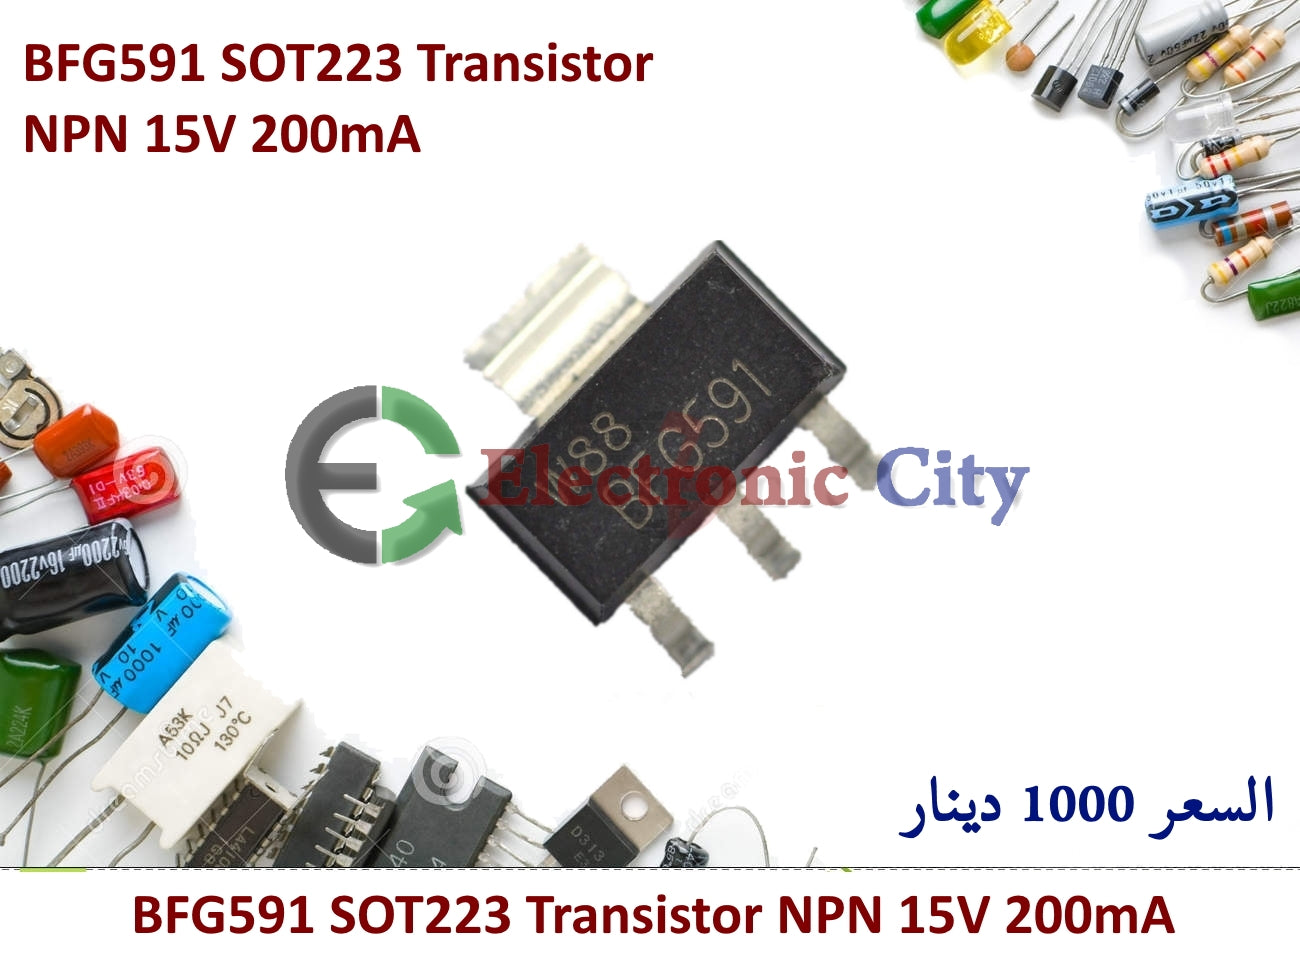 BFG591 SOT223 Transistor NPN 15V 200mA